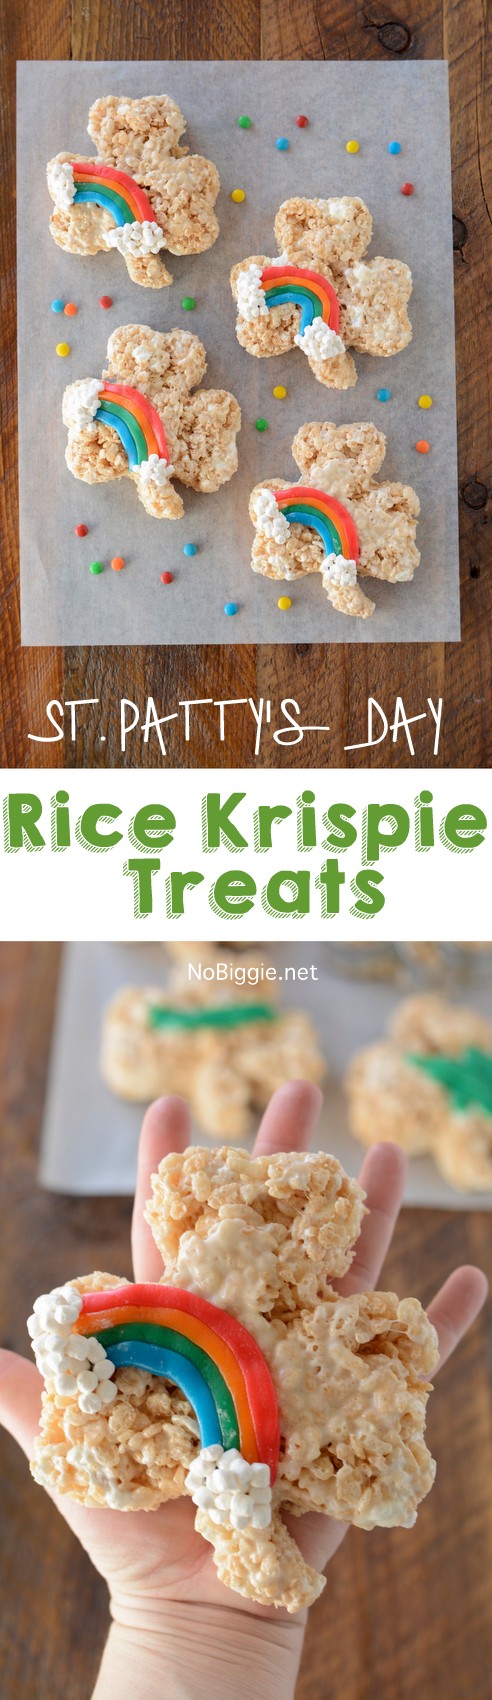 St. Patrick's Day Rice Krispie Treats from No Biggie